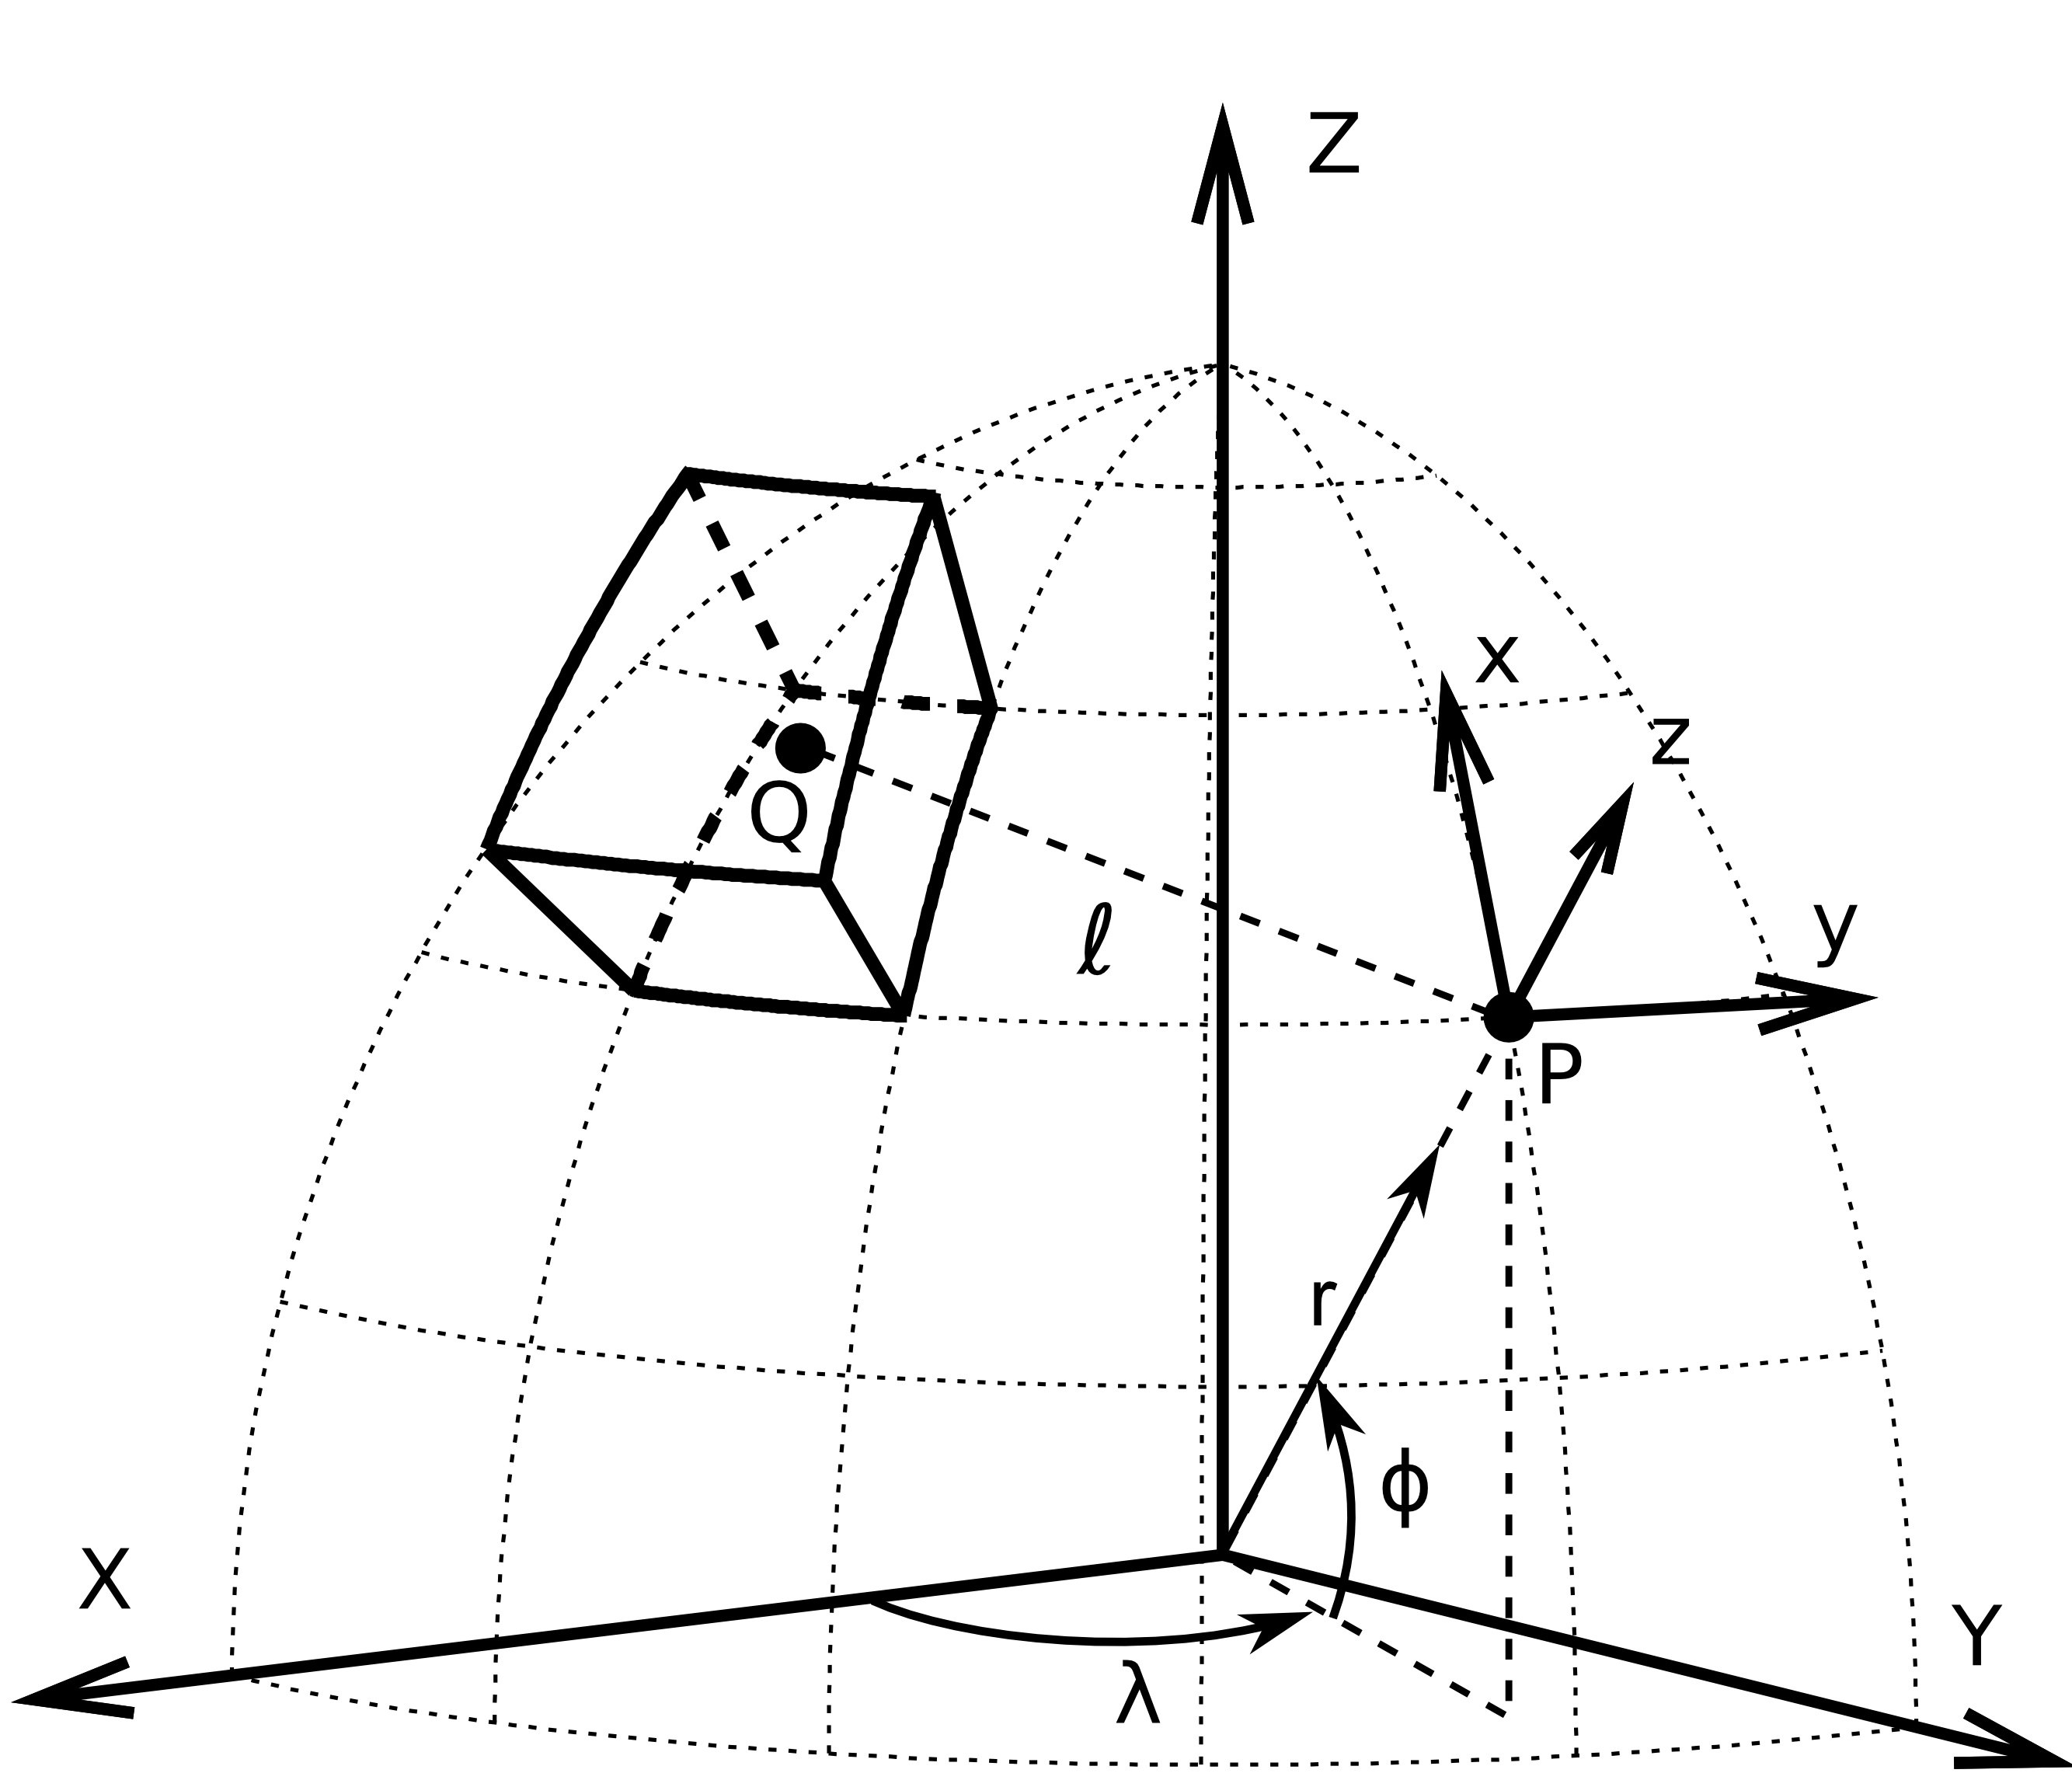 A tesseroid in a geocentric coordinate system